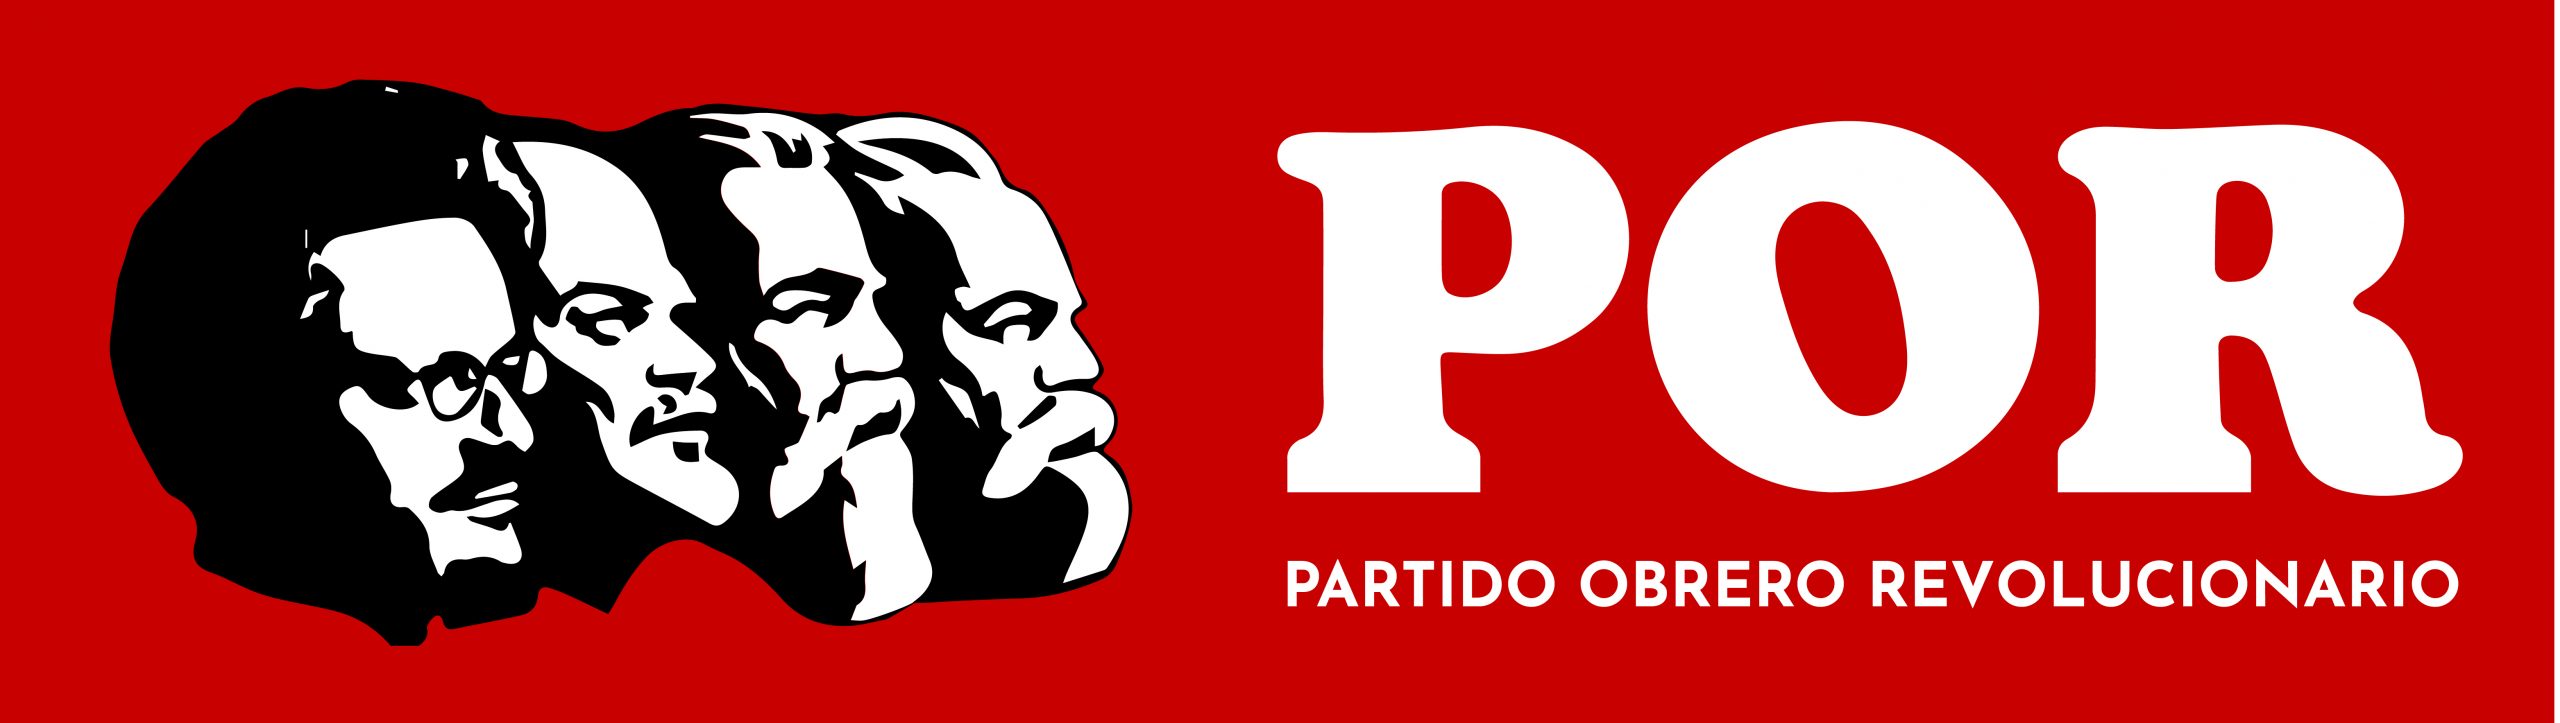 Partido Obrero Revolucionario